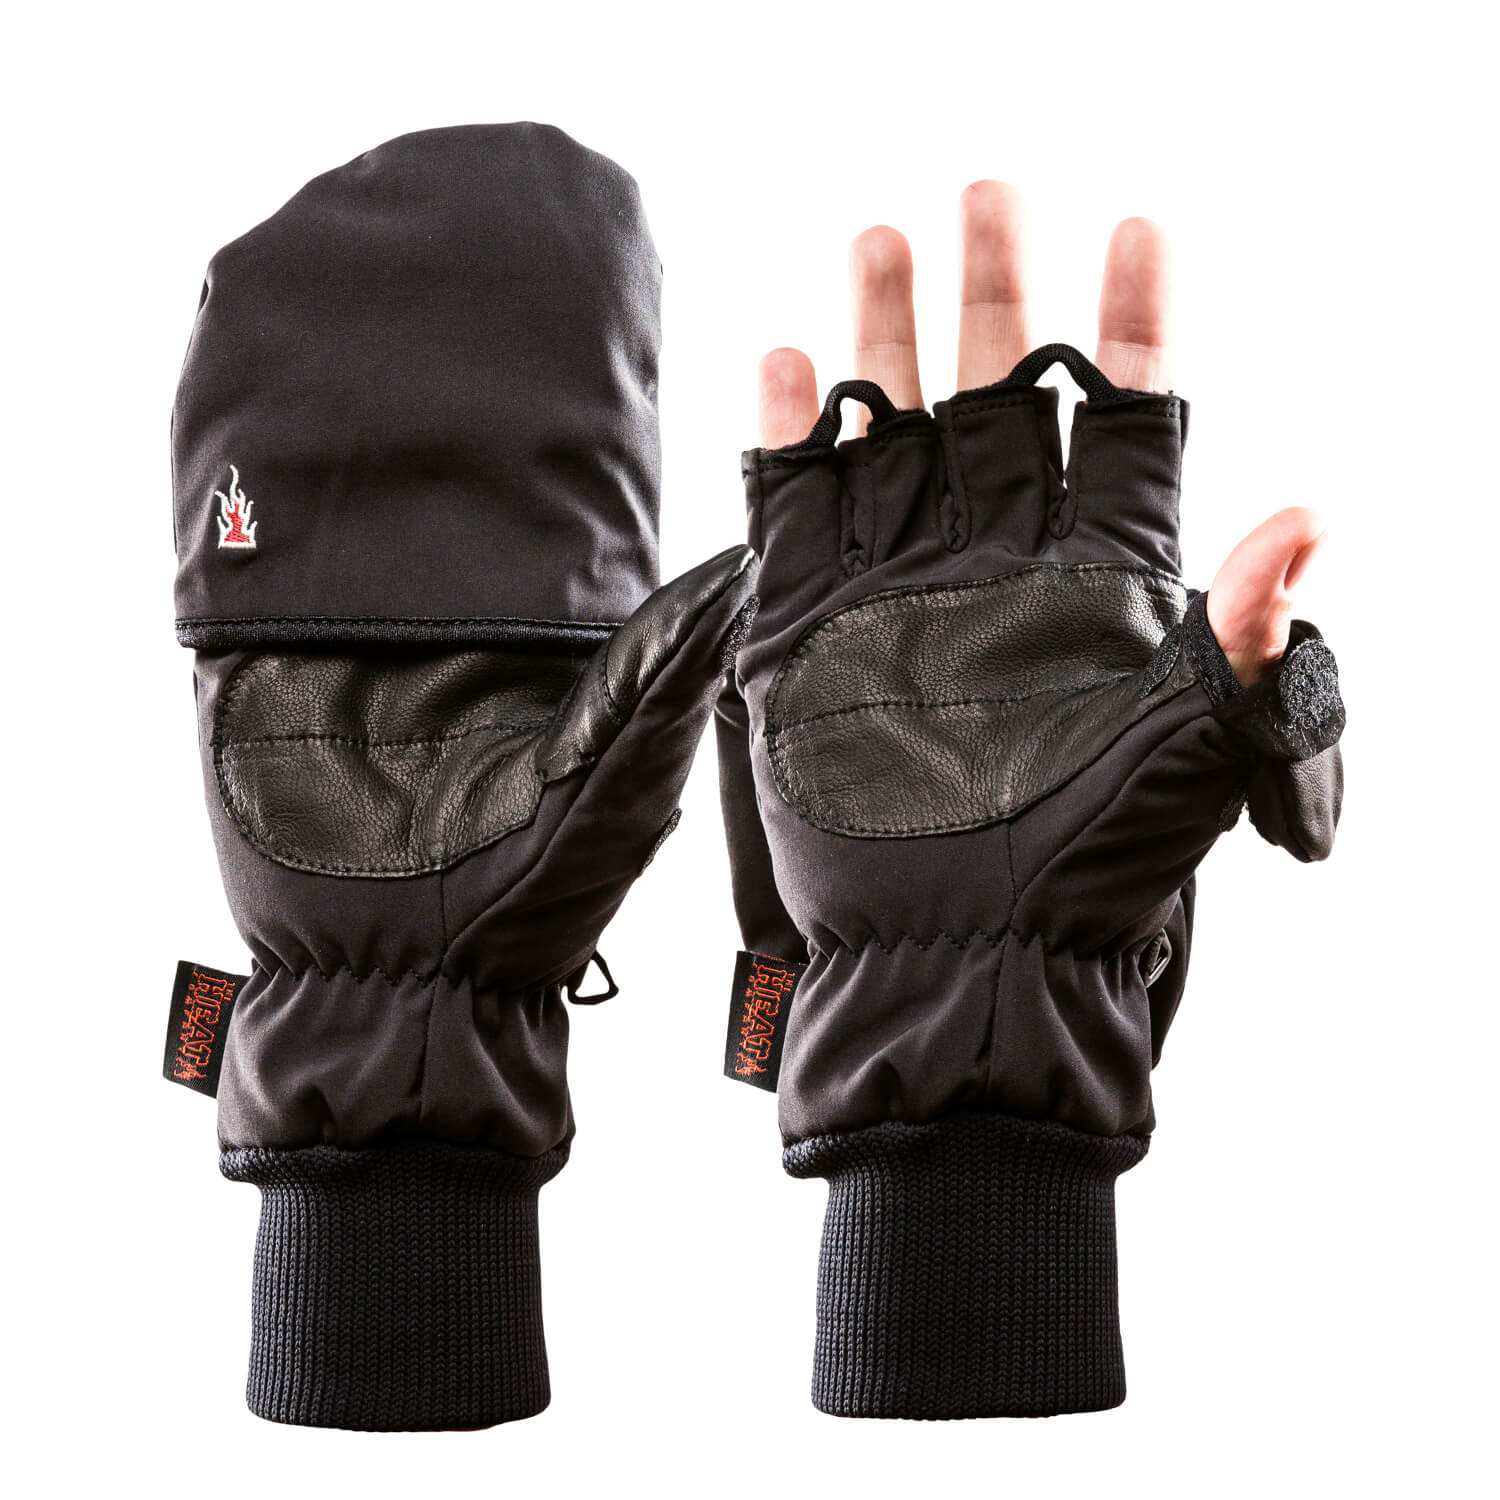 Gear Check: Heat 2 Softshell Photography Glove